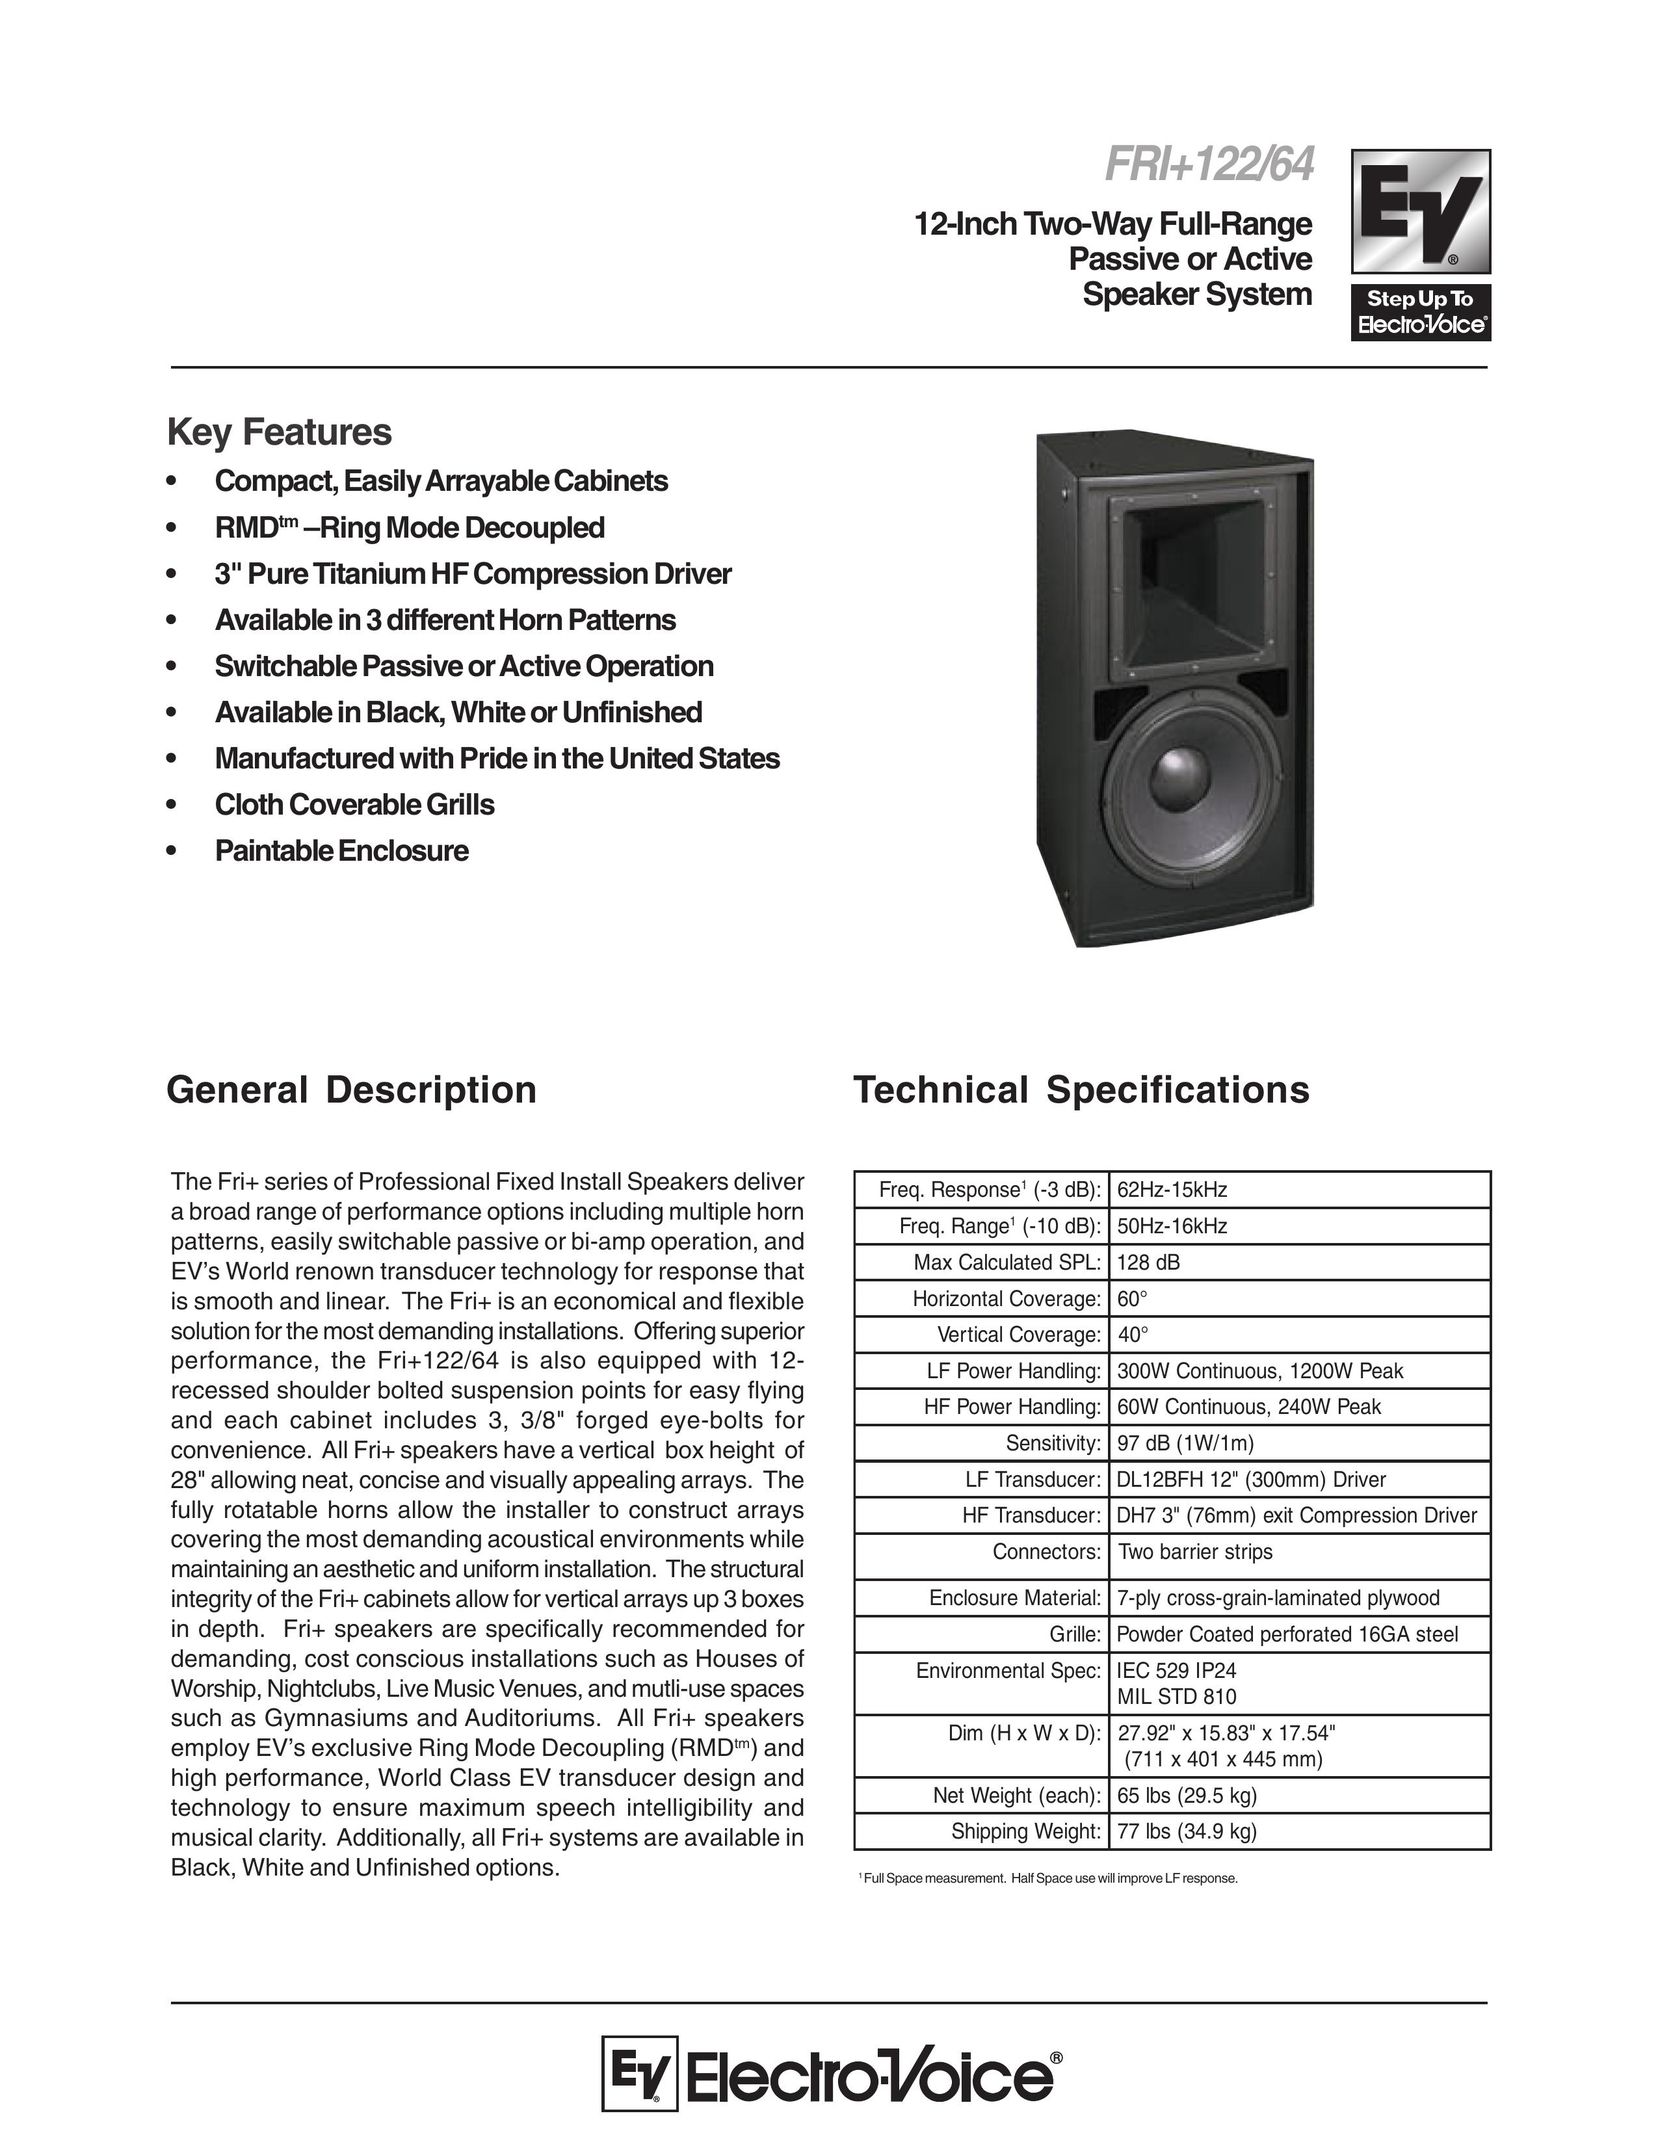 Electro-Voice Fri+122/64 Speaker System User Manual